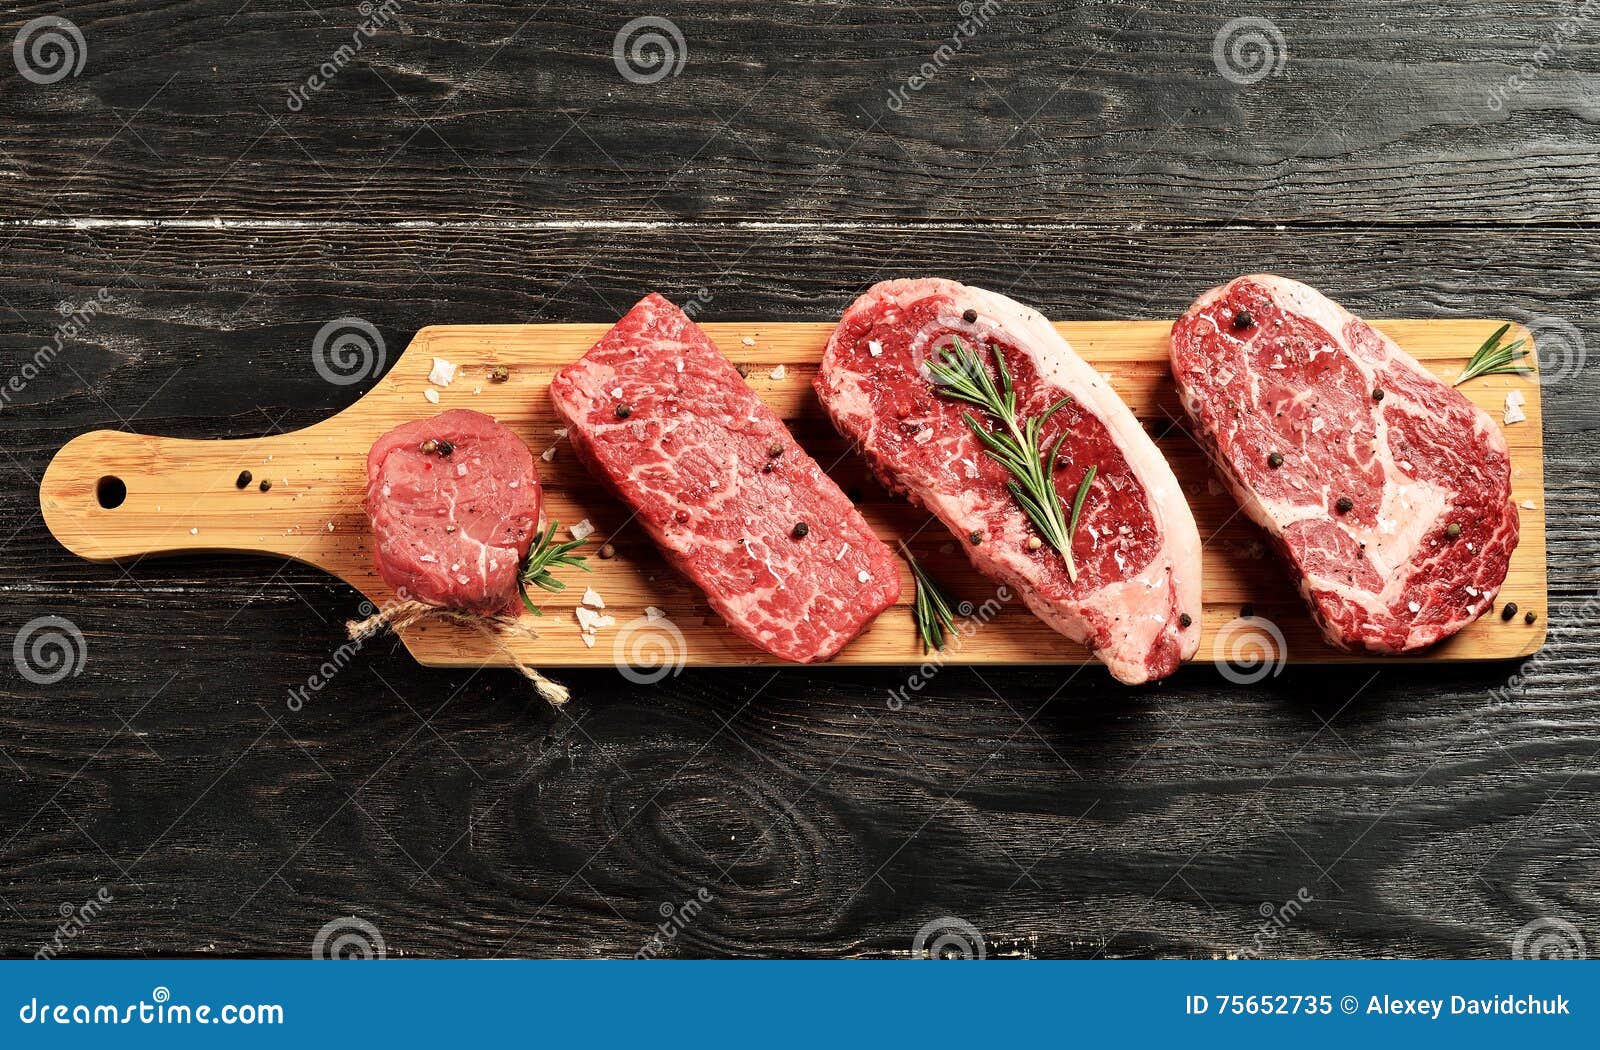 fresh raw prime black angus beef steaks on wooden board